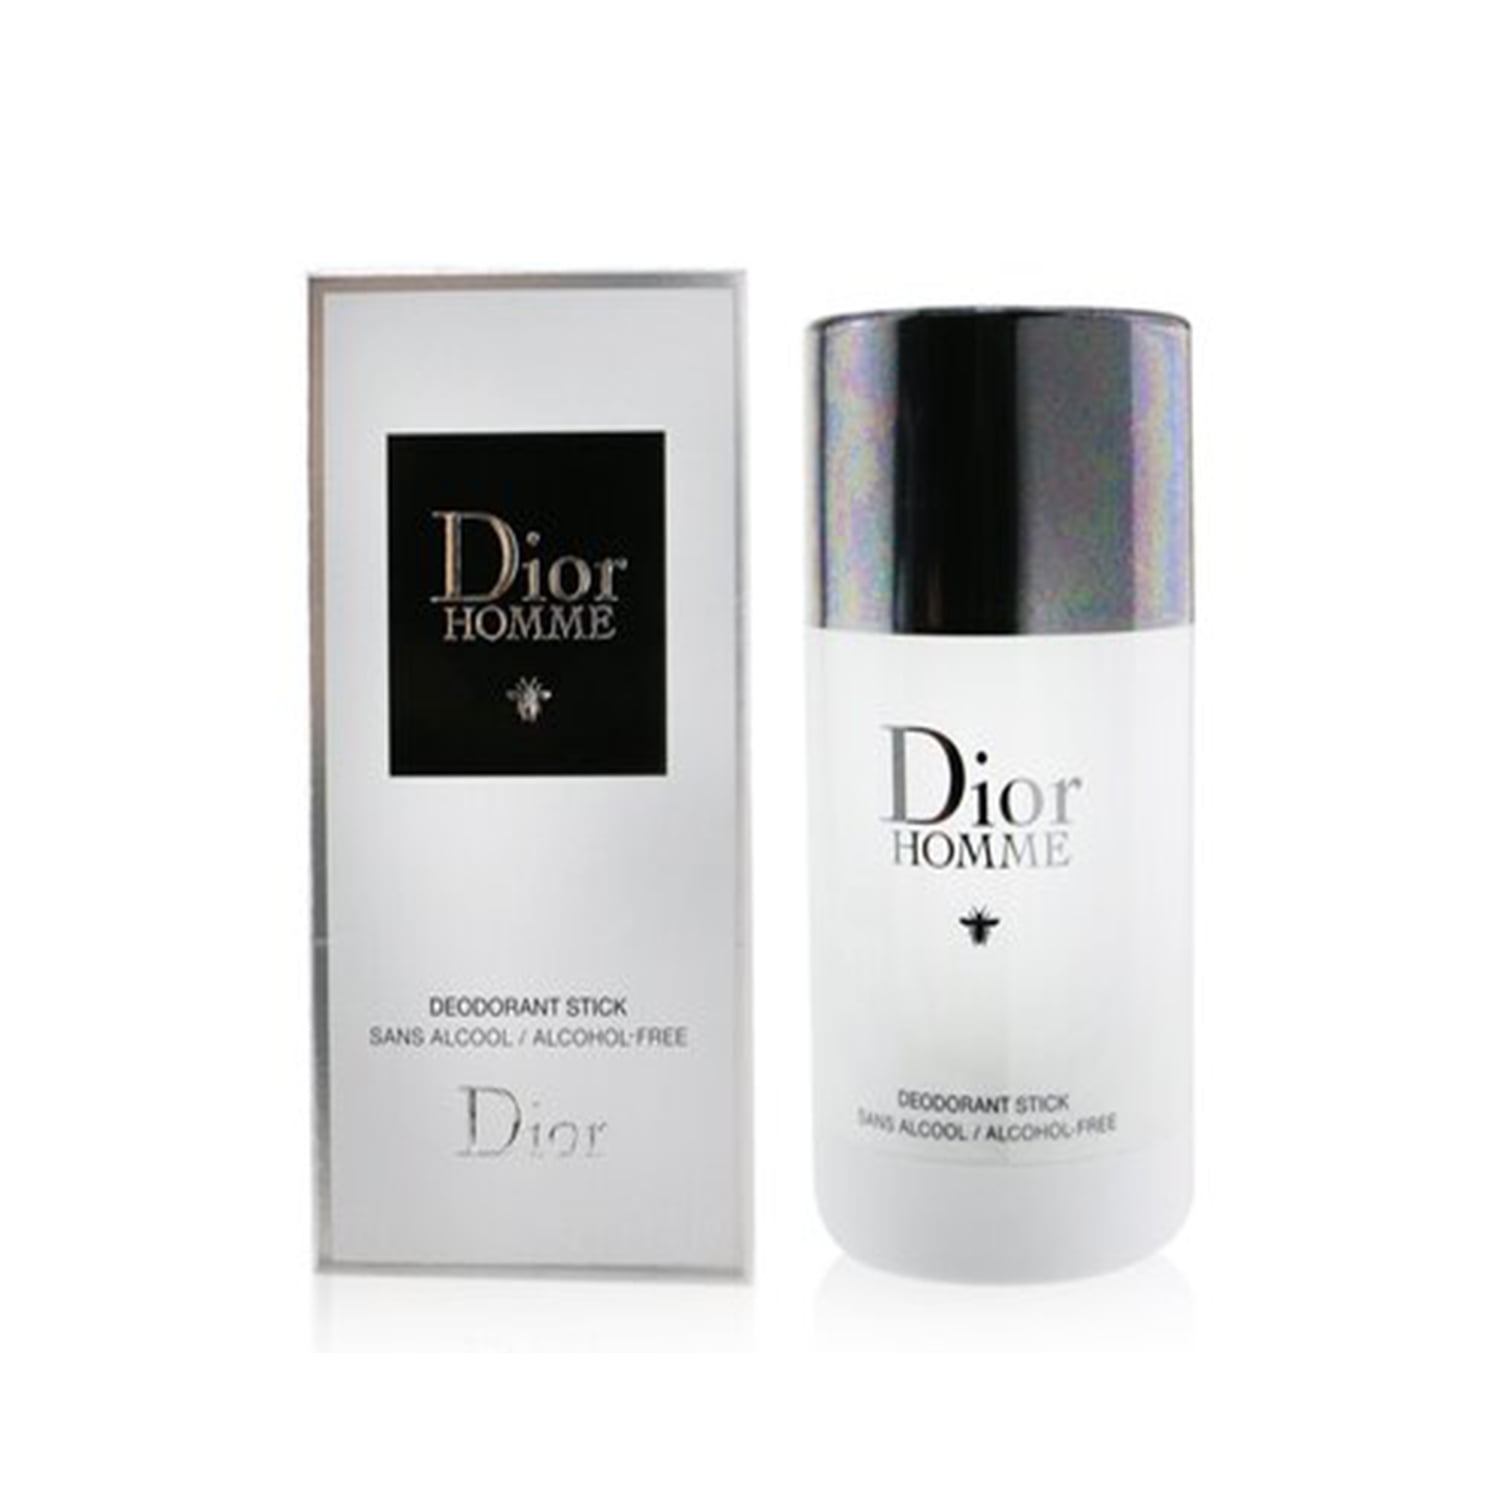 Påhængsmotor bryst At interagere Christian Dior Homme Deodorant Stick Alcohol Free 75 g / 2.6 oz -  Walmart.com